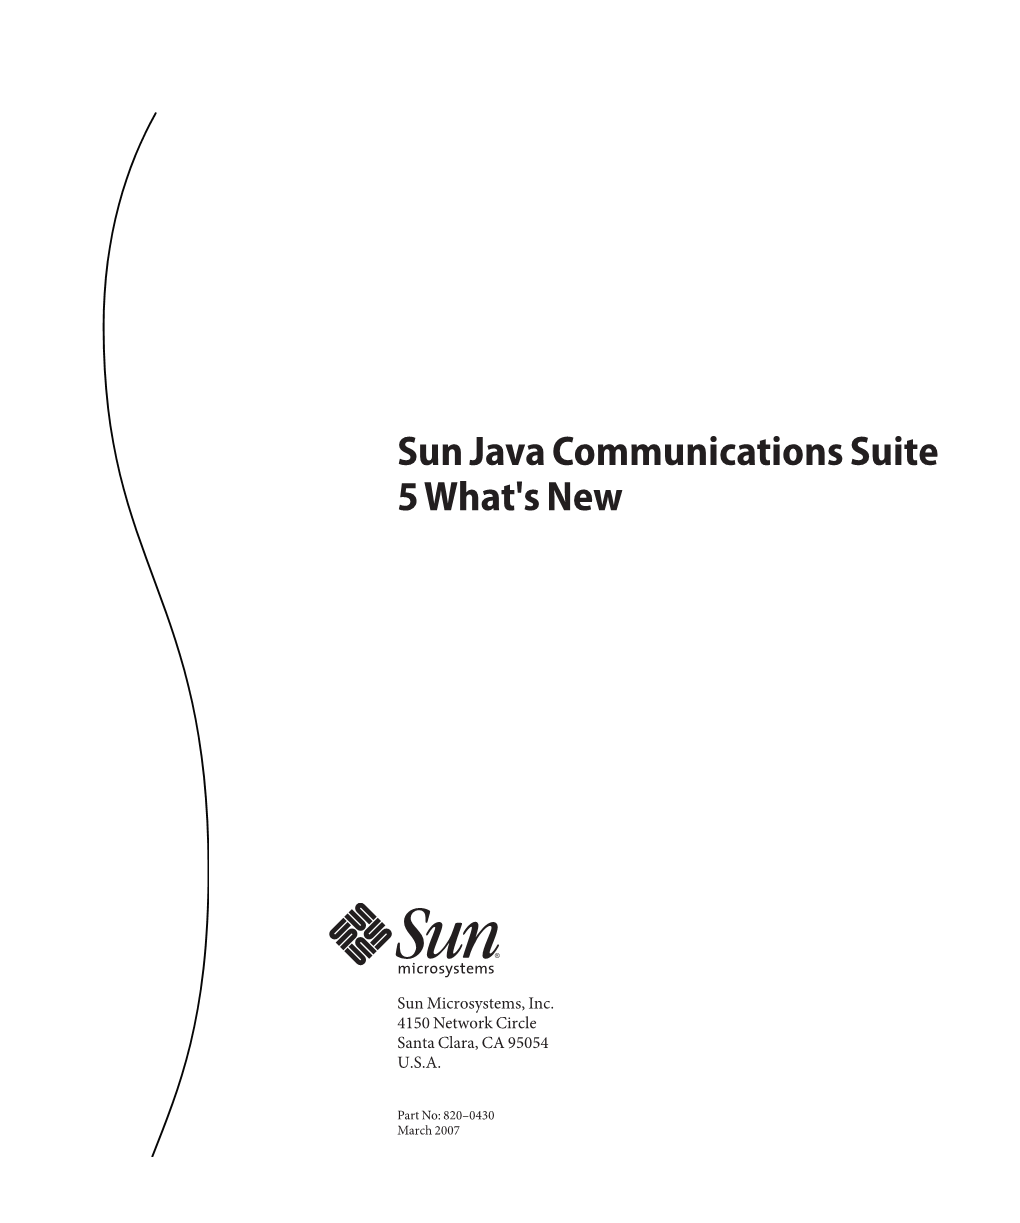 Sun Java Communications Suite 5 What's